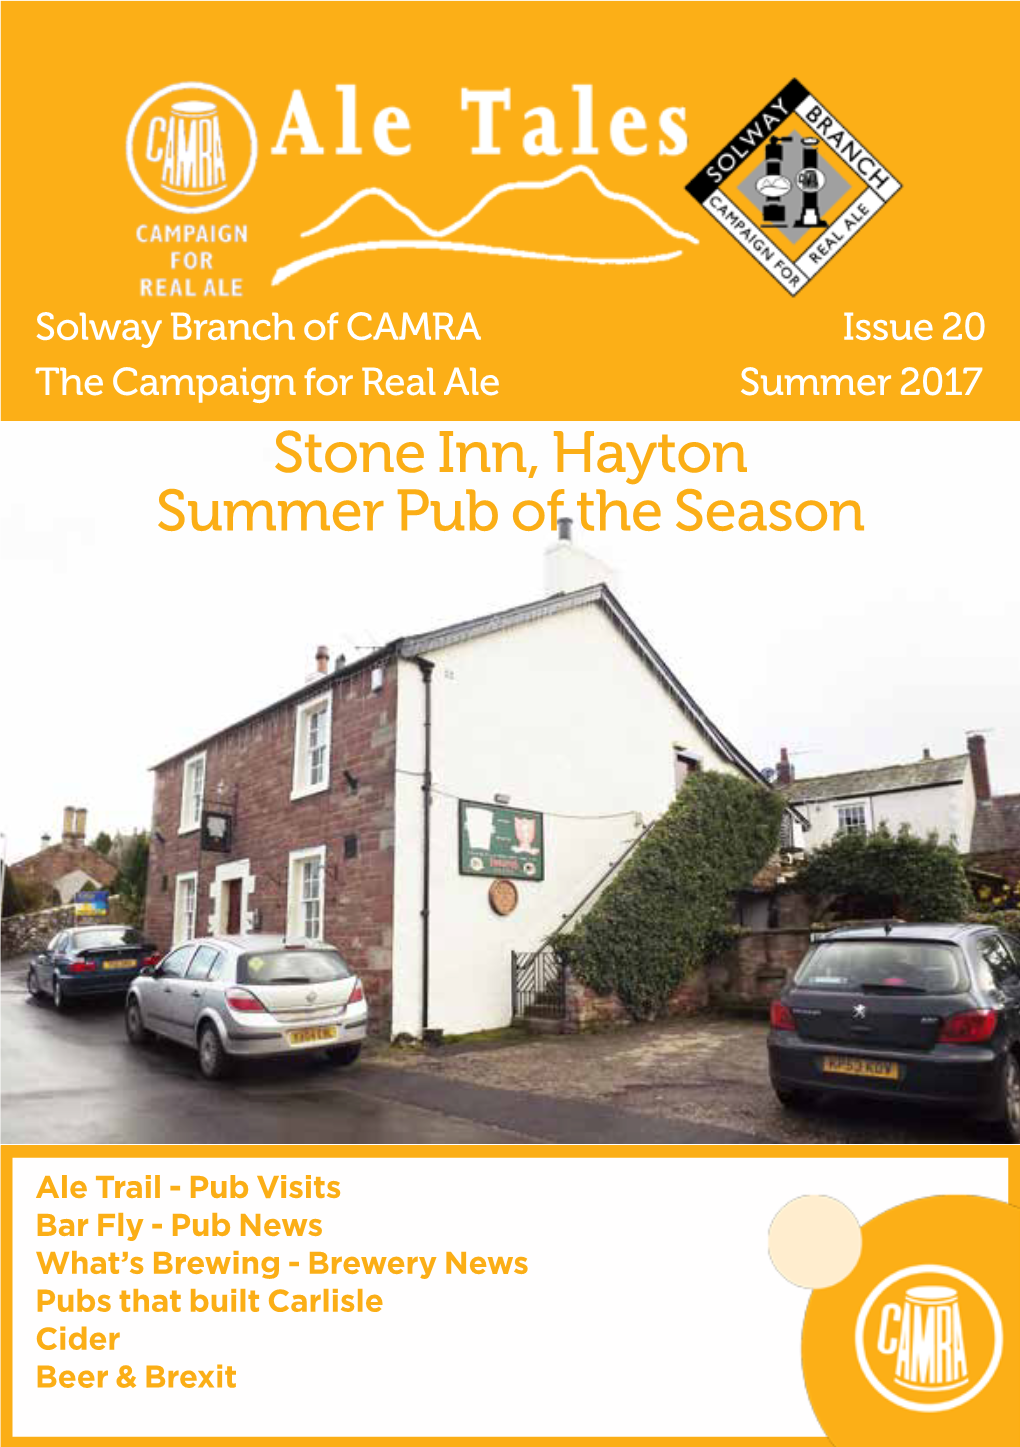 Stone Inn, Hayton Summer Pub of the Season